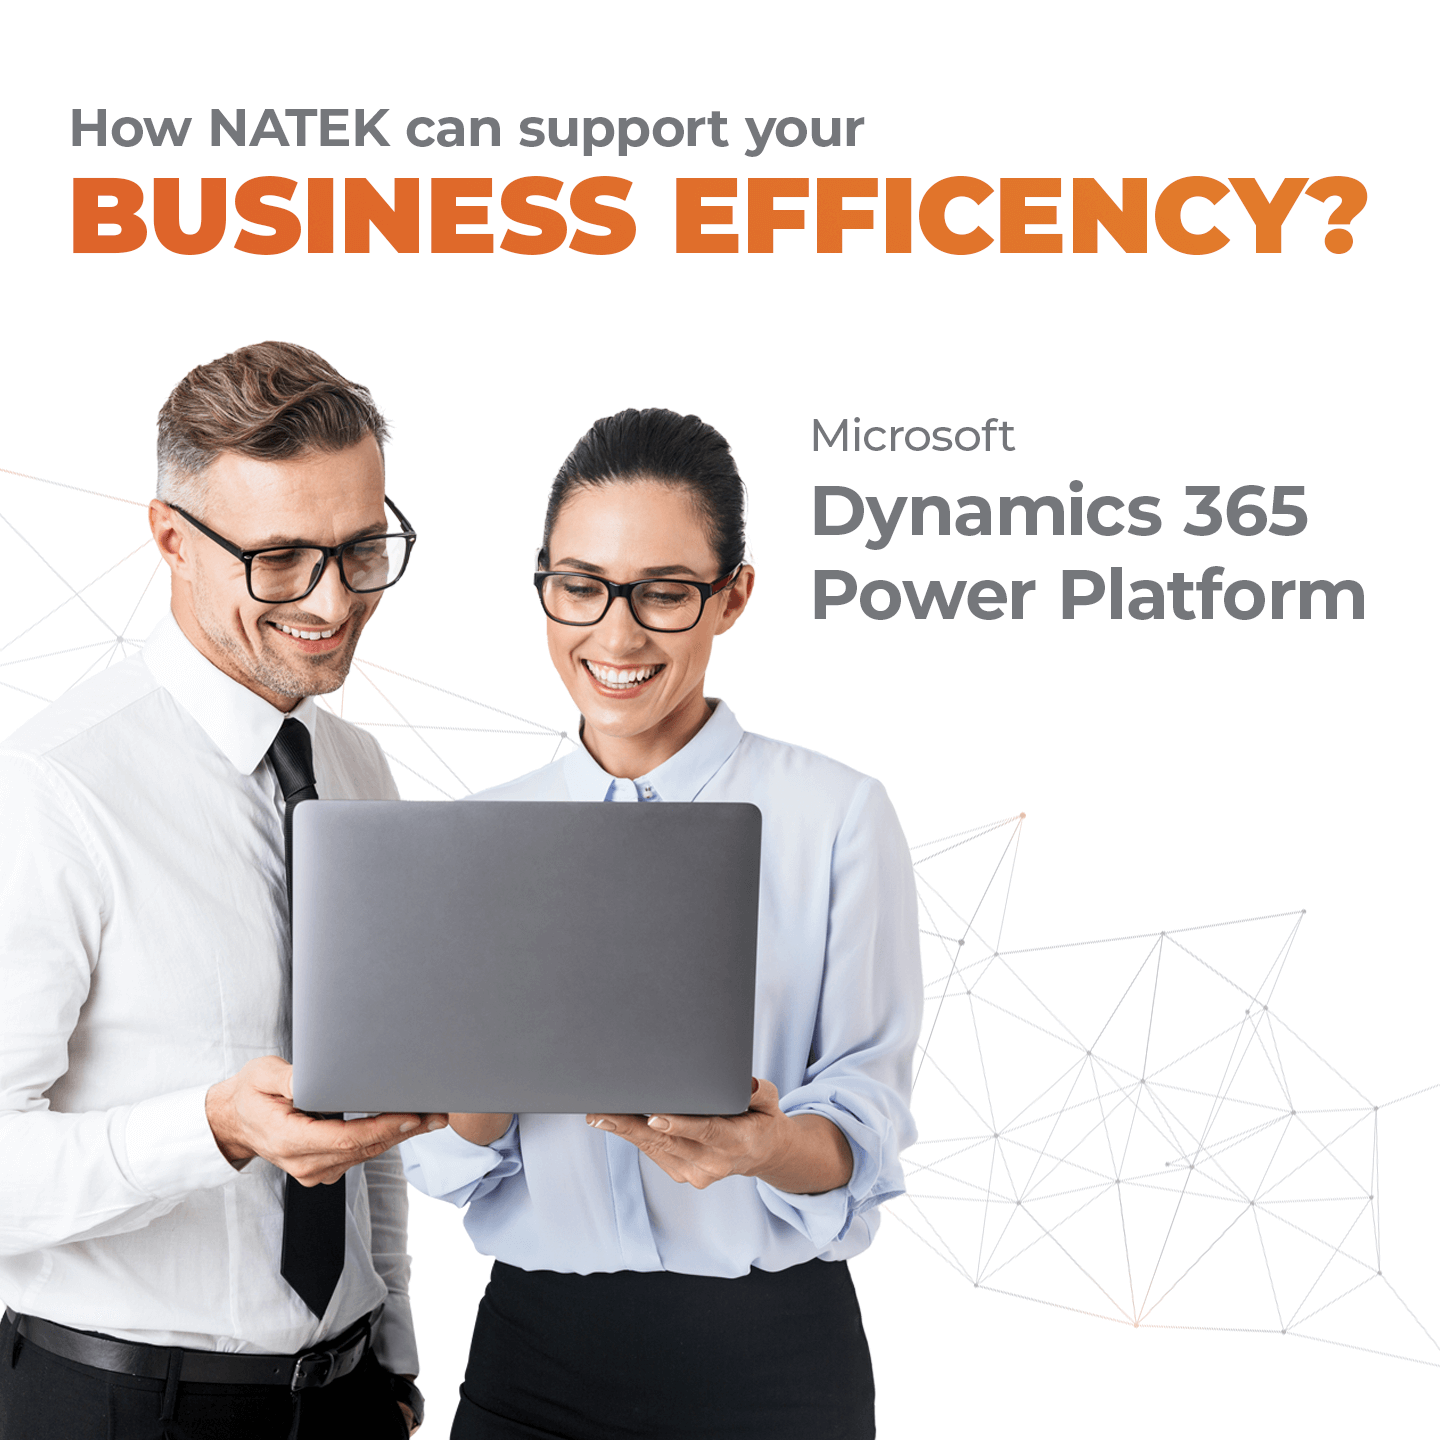 Maximizing Business Efficiency - Microsoft Dynamics 365 and Power Platform Solutions